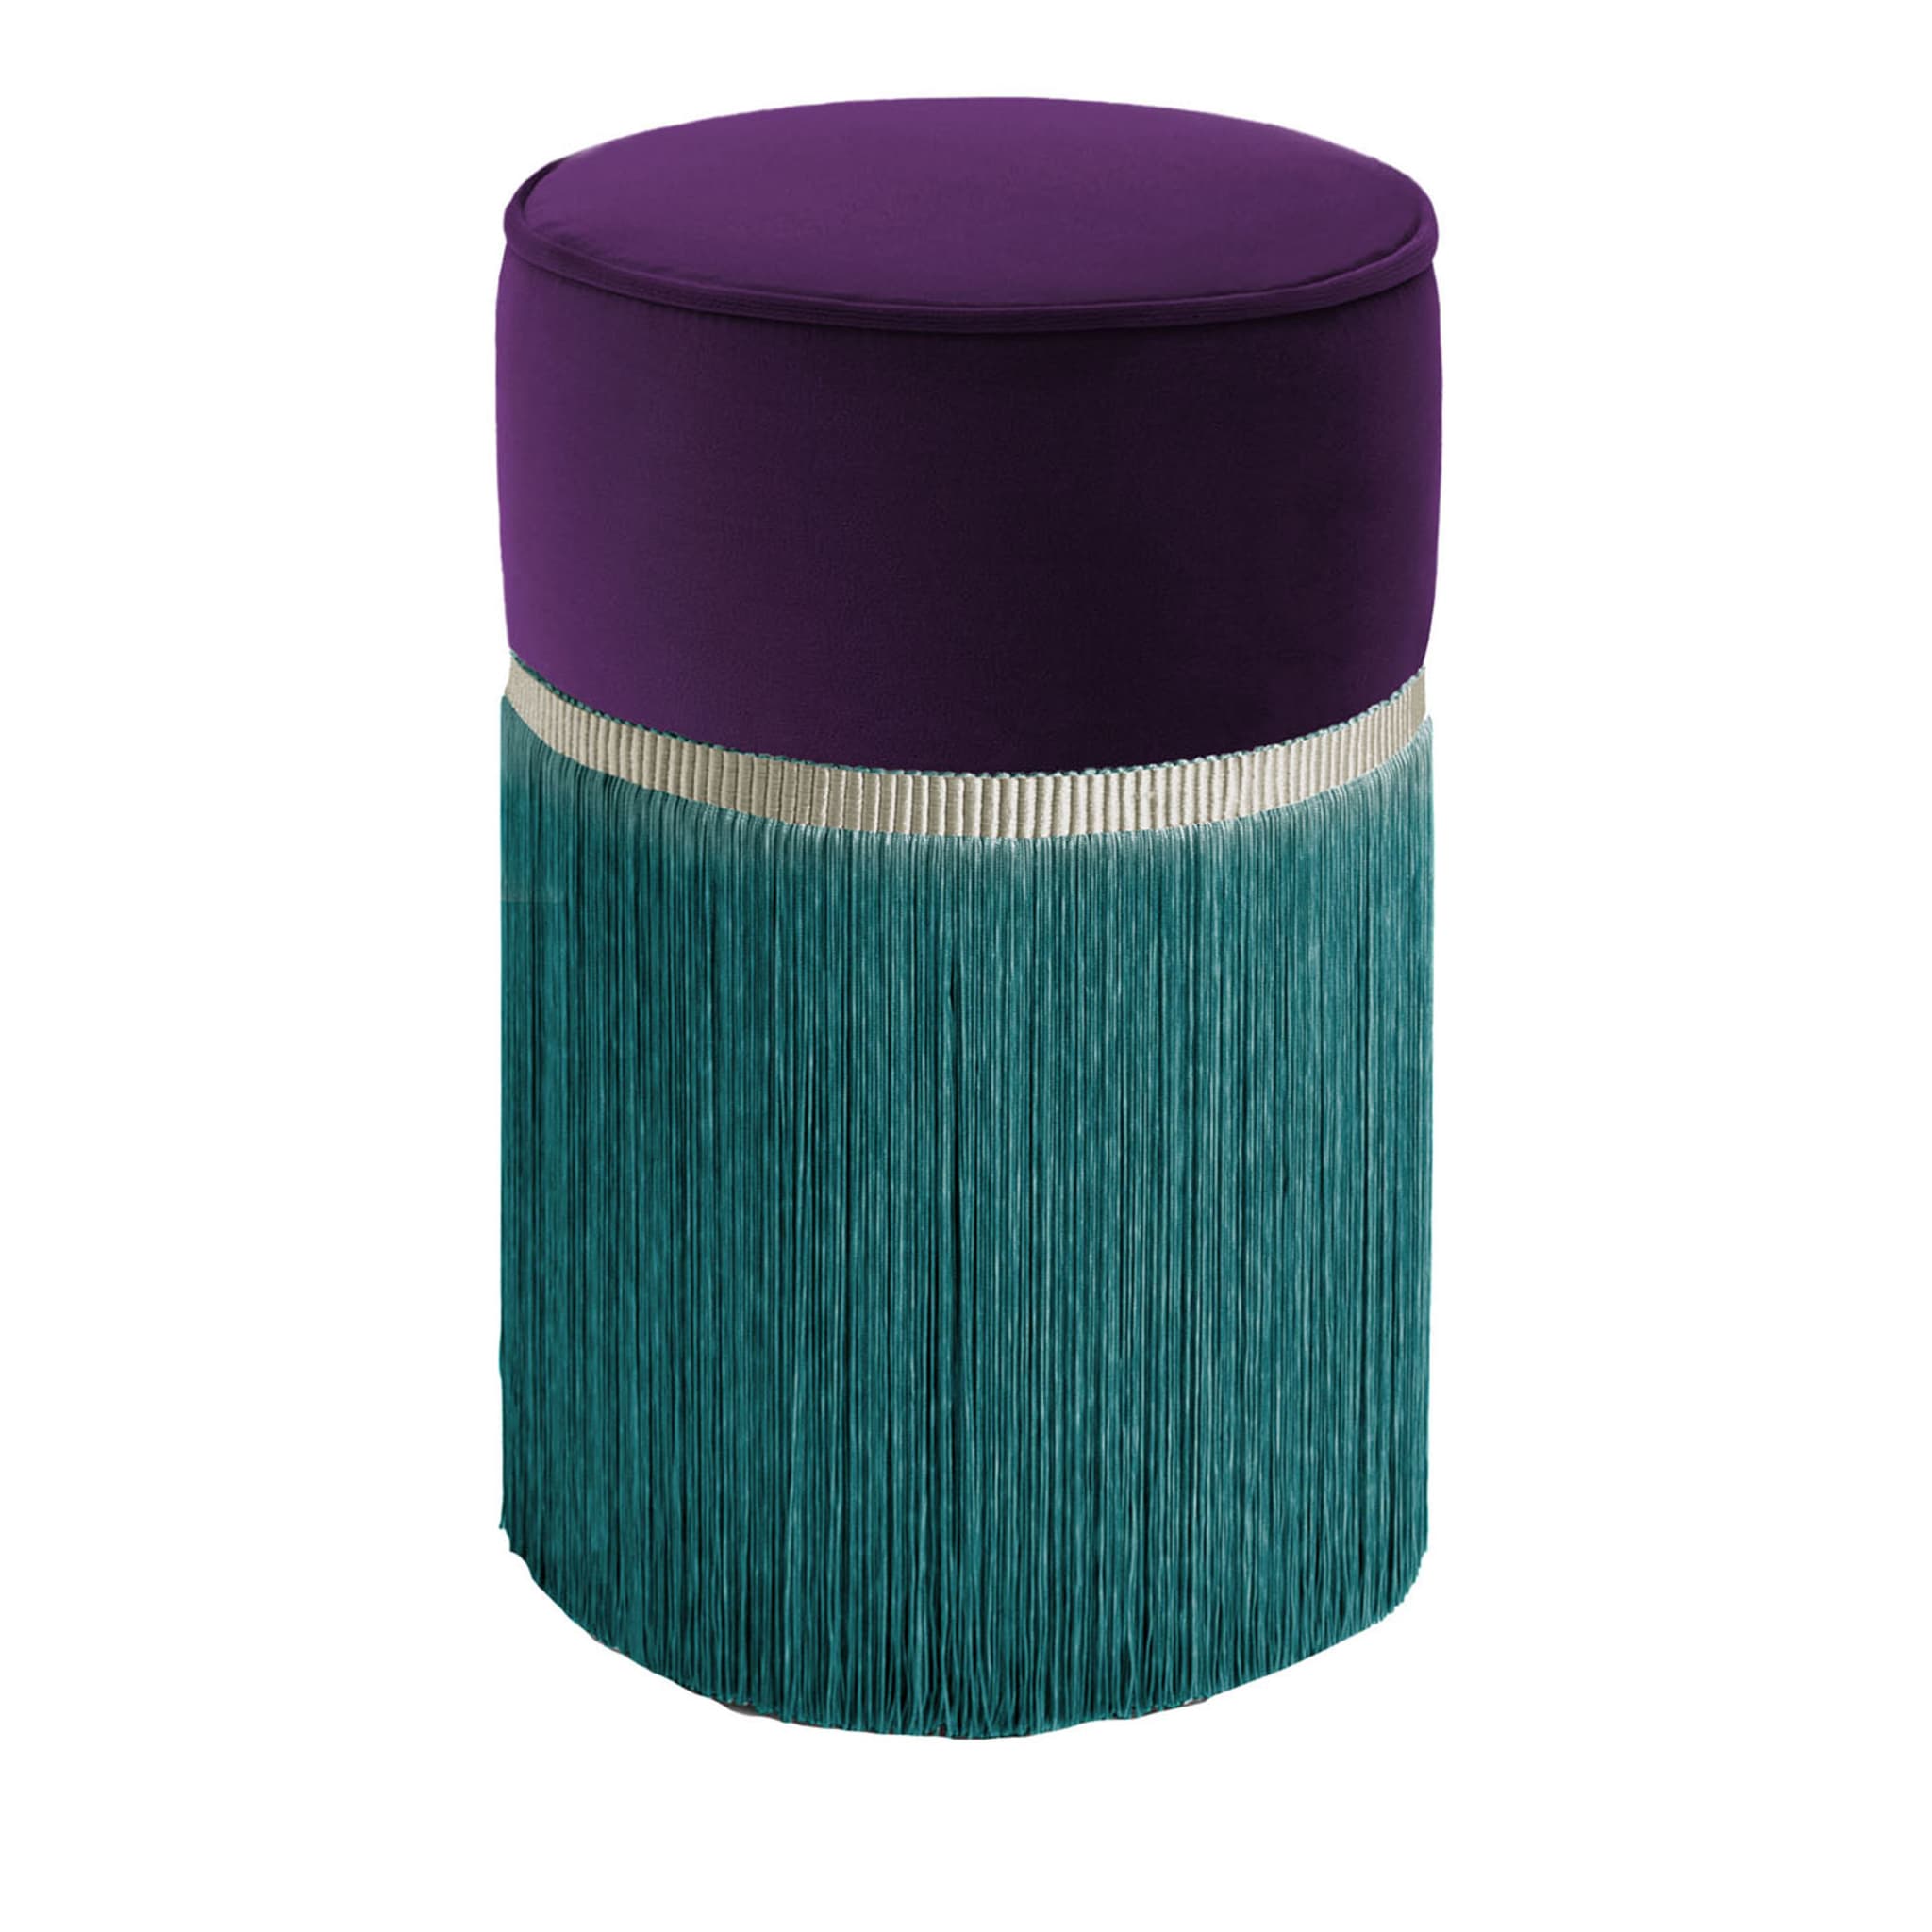 Decò Couture Geometric Purple and Green Ottoman - Main view